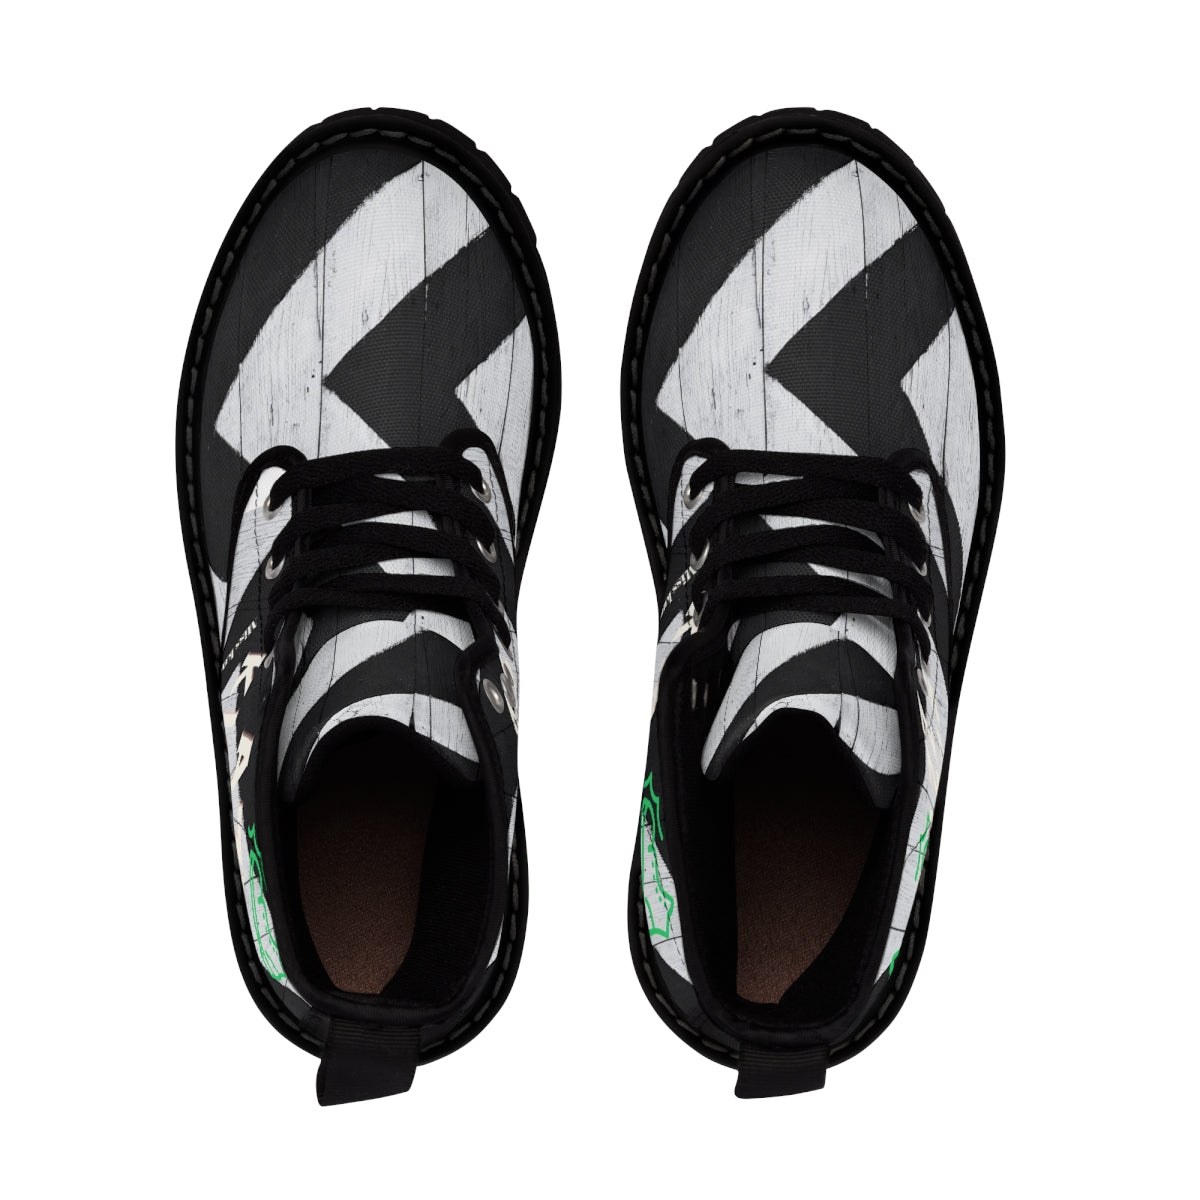 Men's "Ass Kicker" Canvas shoe Boots  Miss knockout ™ Merchandise